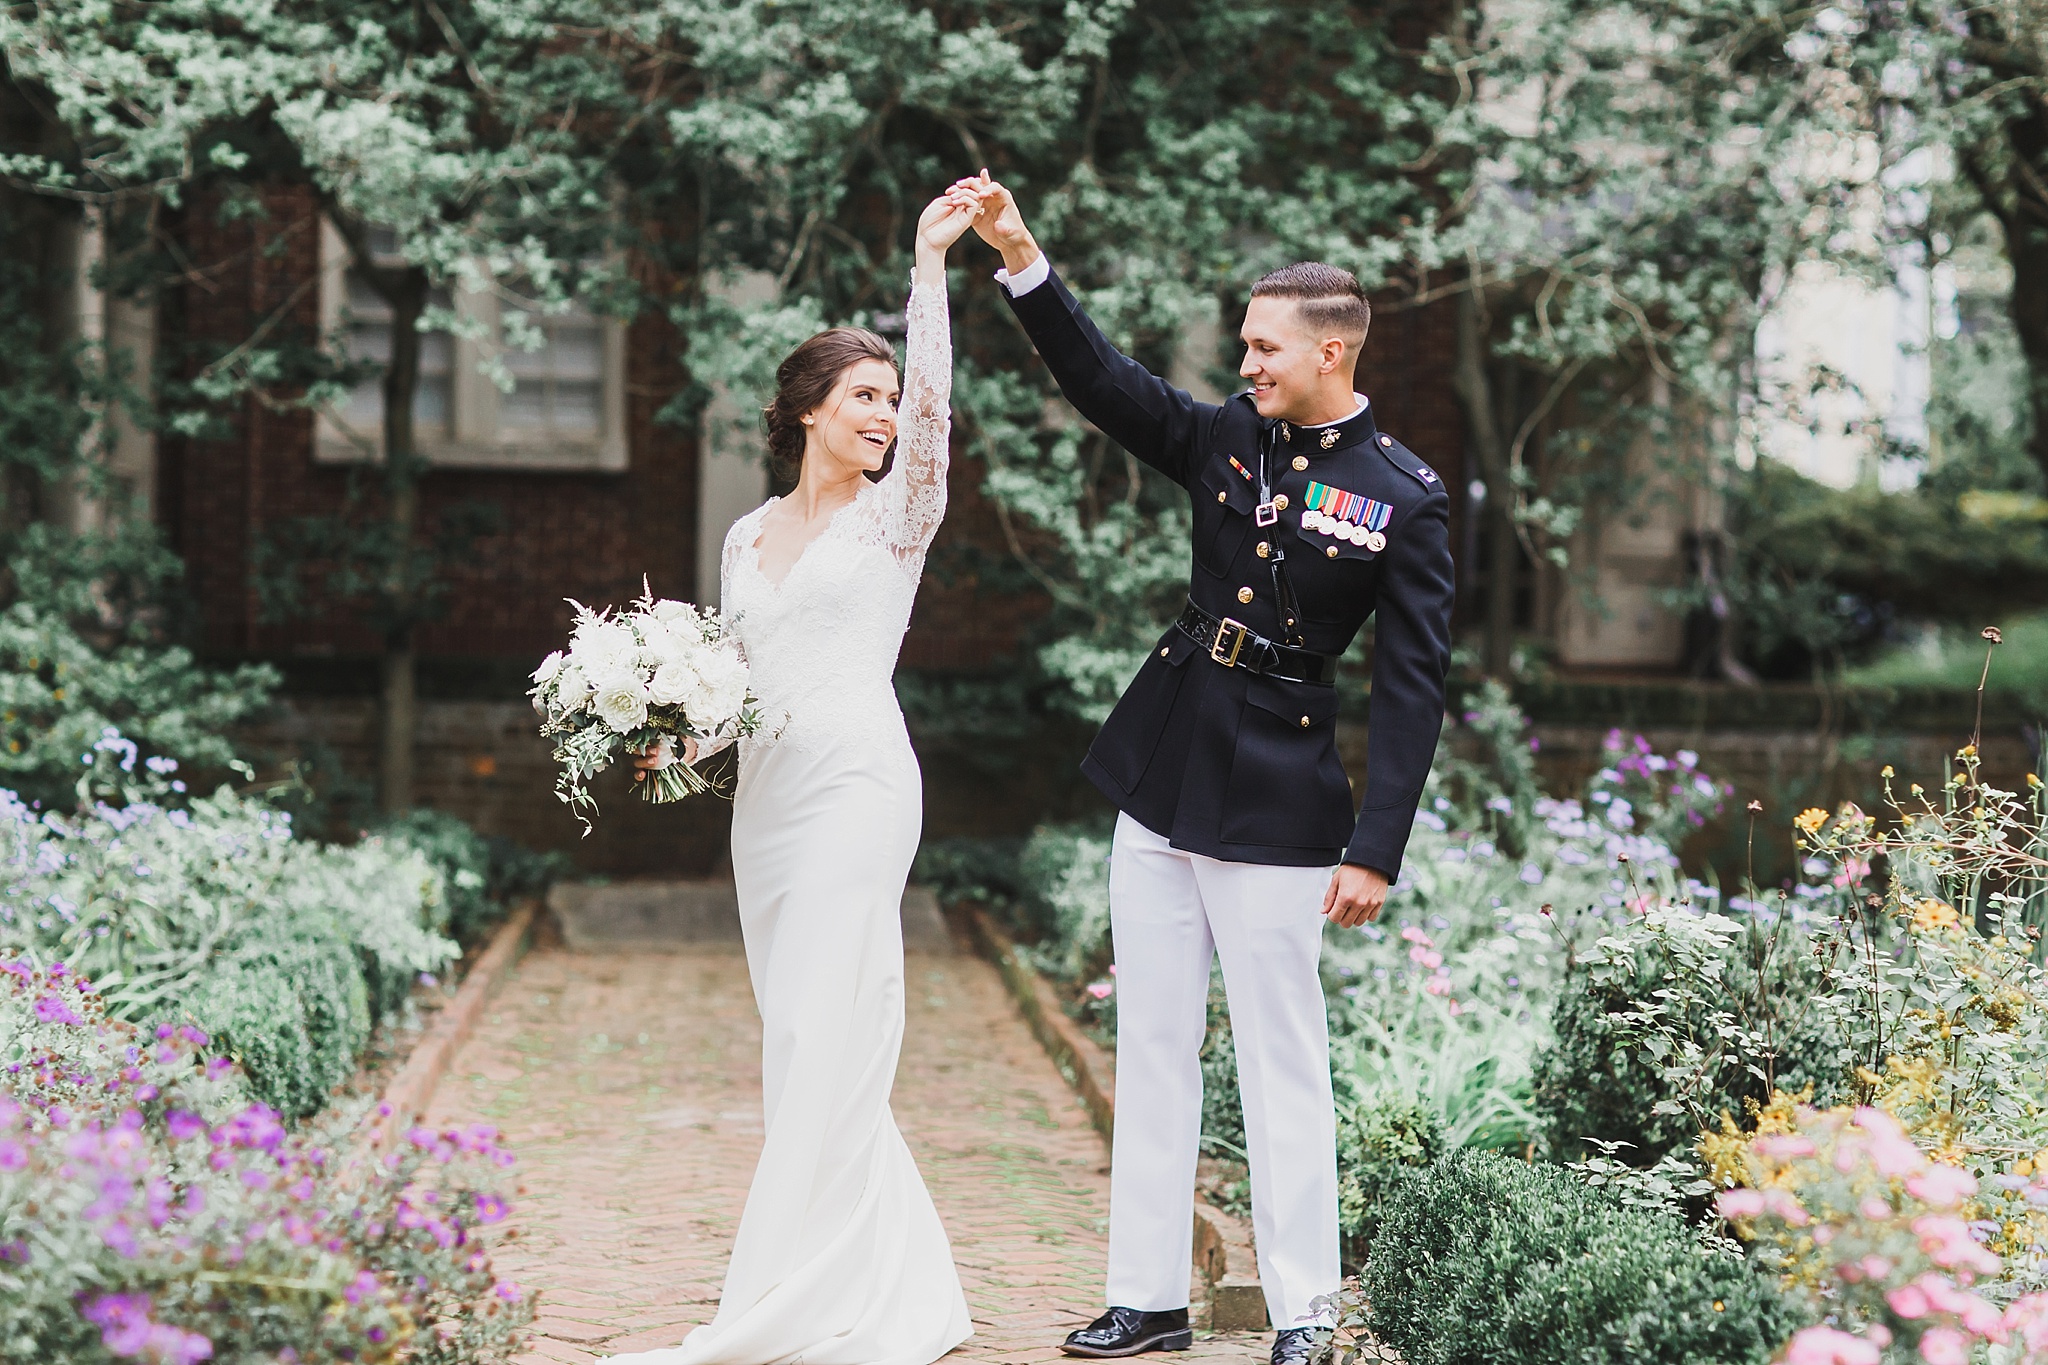 Fredericksburg VA wedding day photographed by M Harris Studios